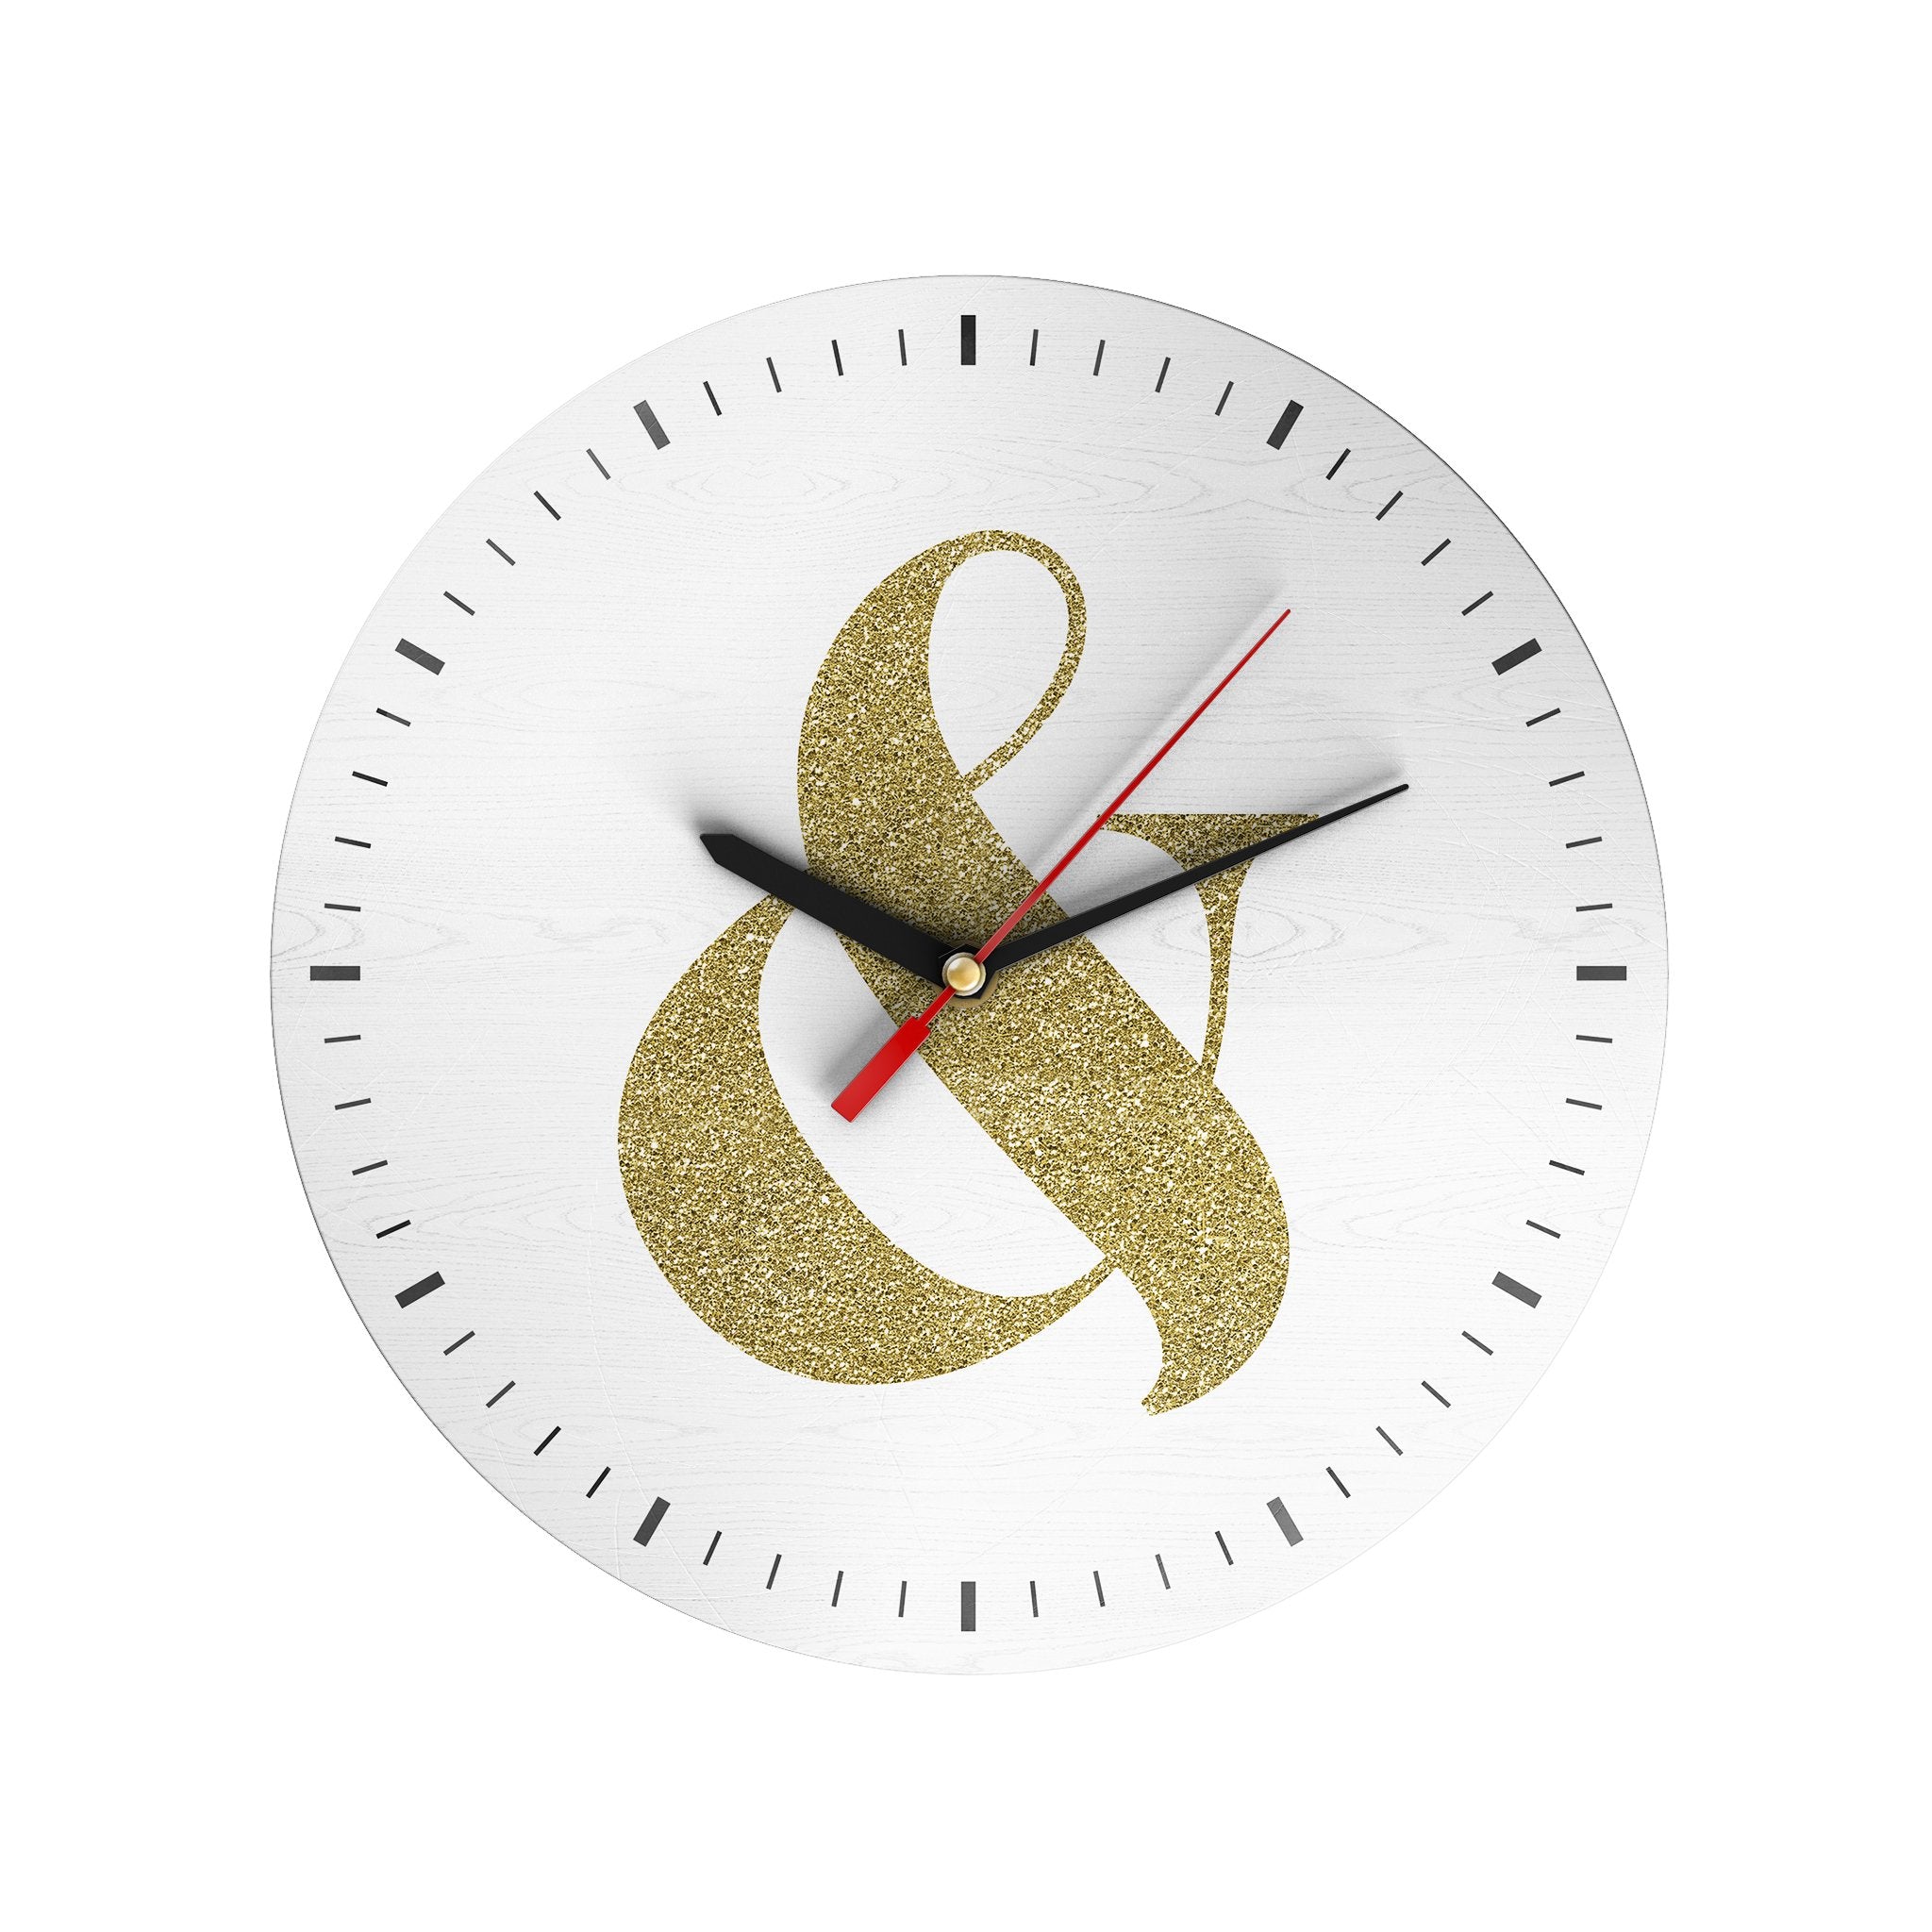 Ampersand clock